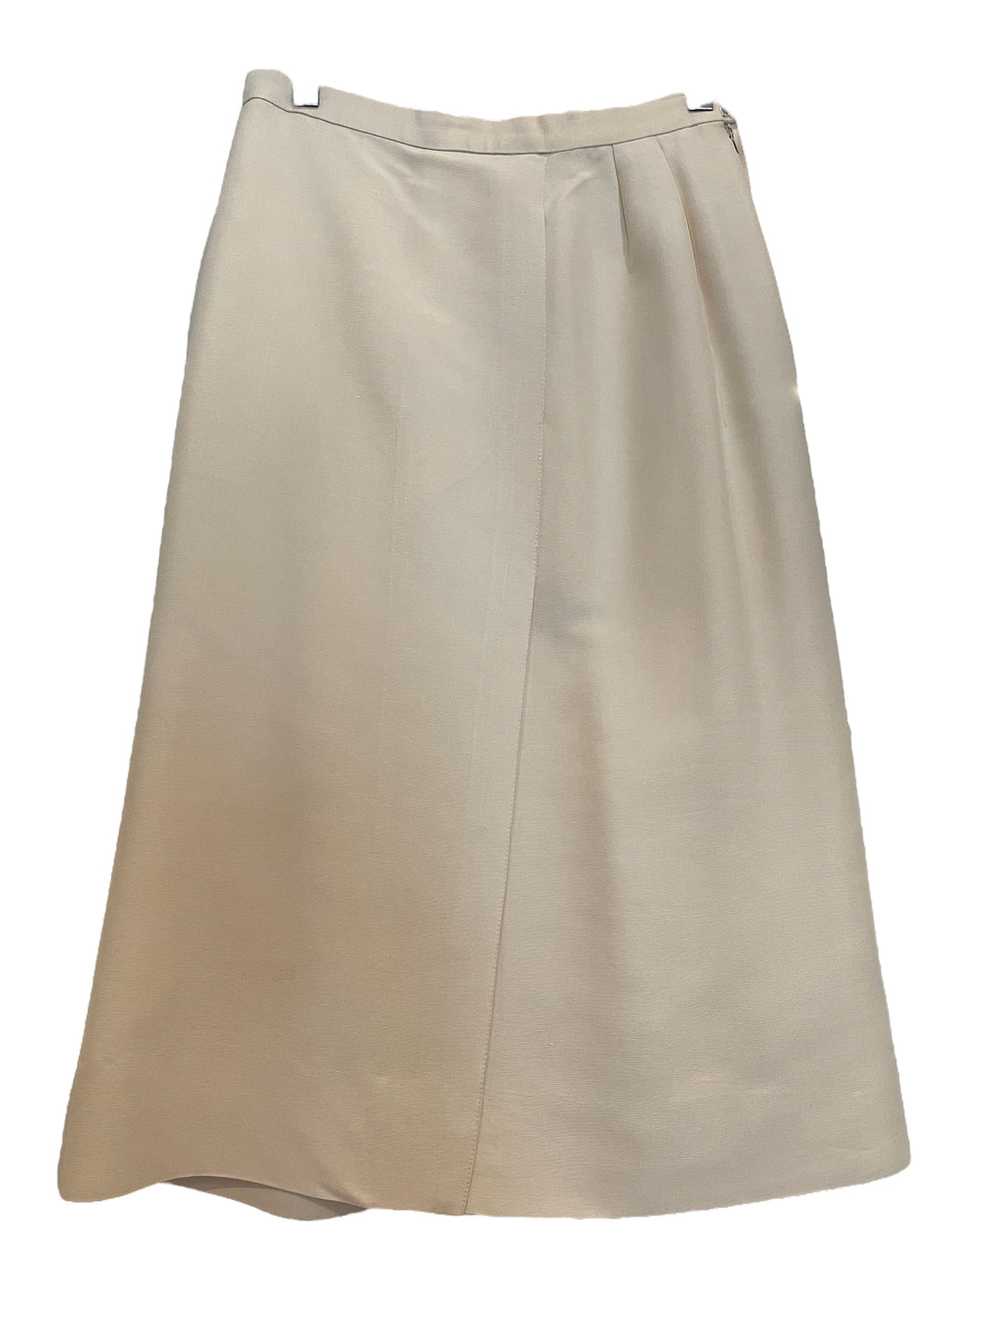 Cream Chanel Silk Skirt (Size 4) - image 1